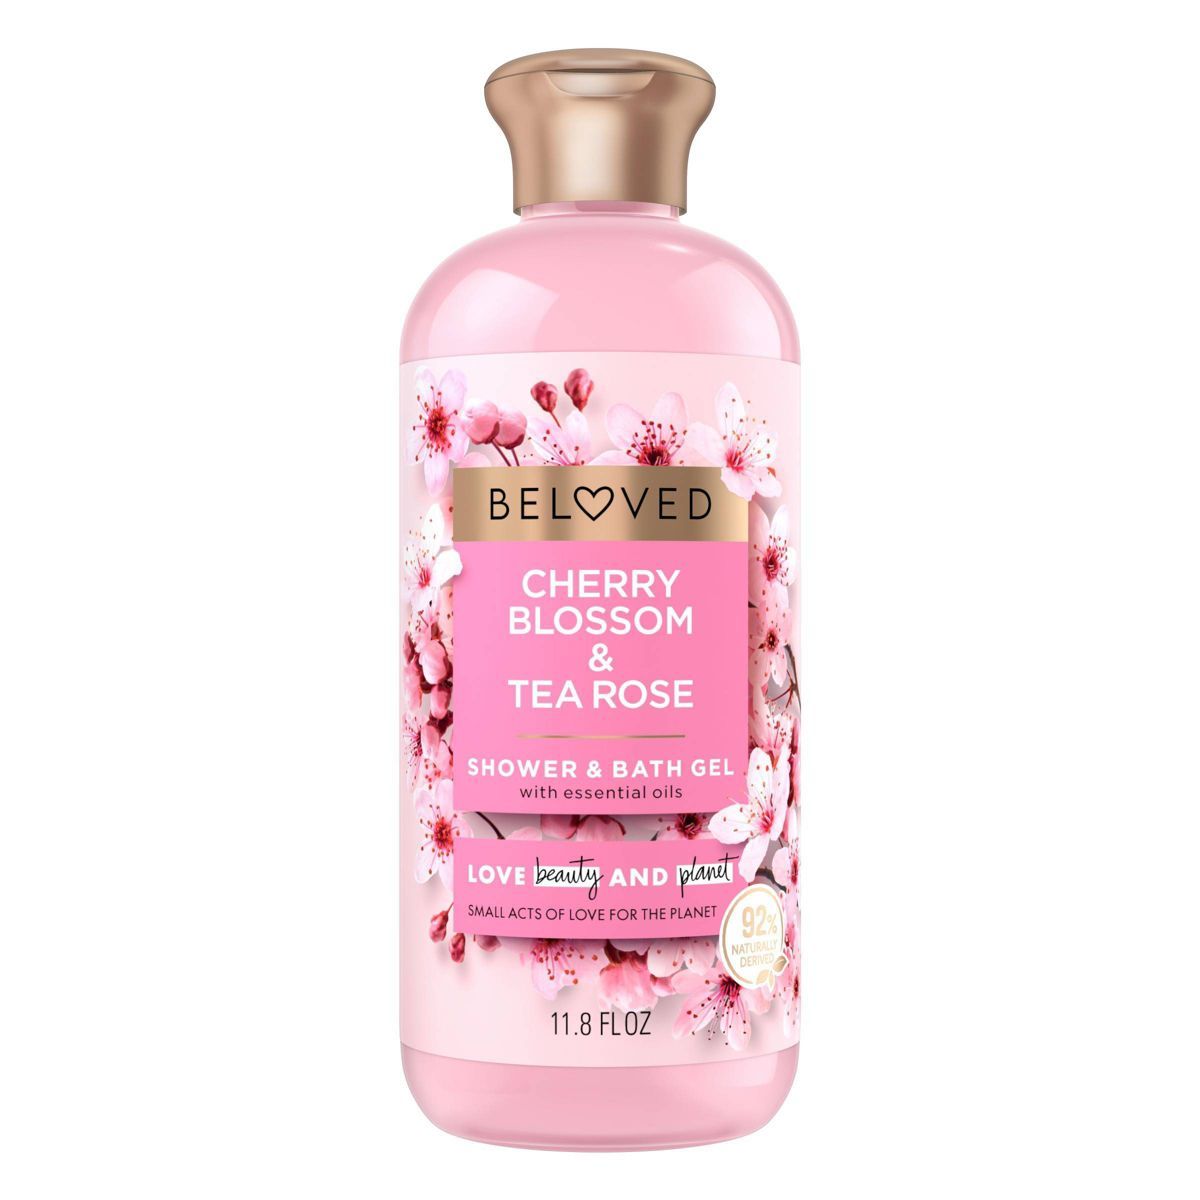 Beloved Cherry Blossom & Tea Rose Shower & Bath Gel Body Wash - 11.8 fl oz | Target